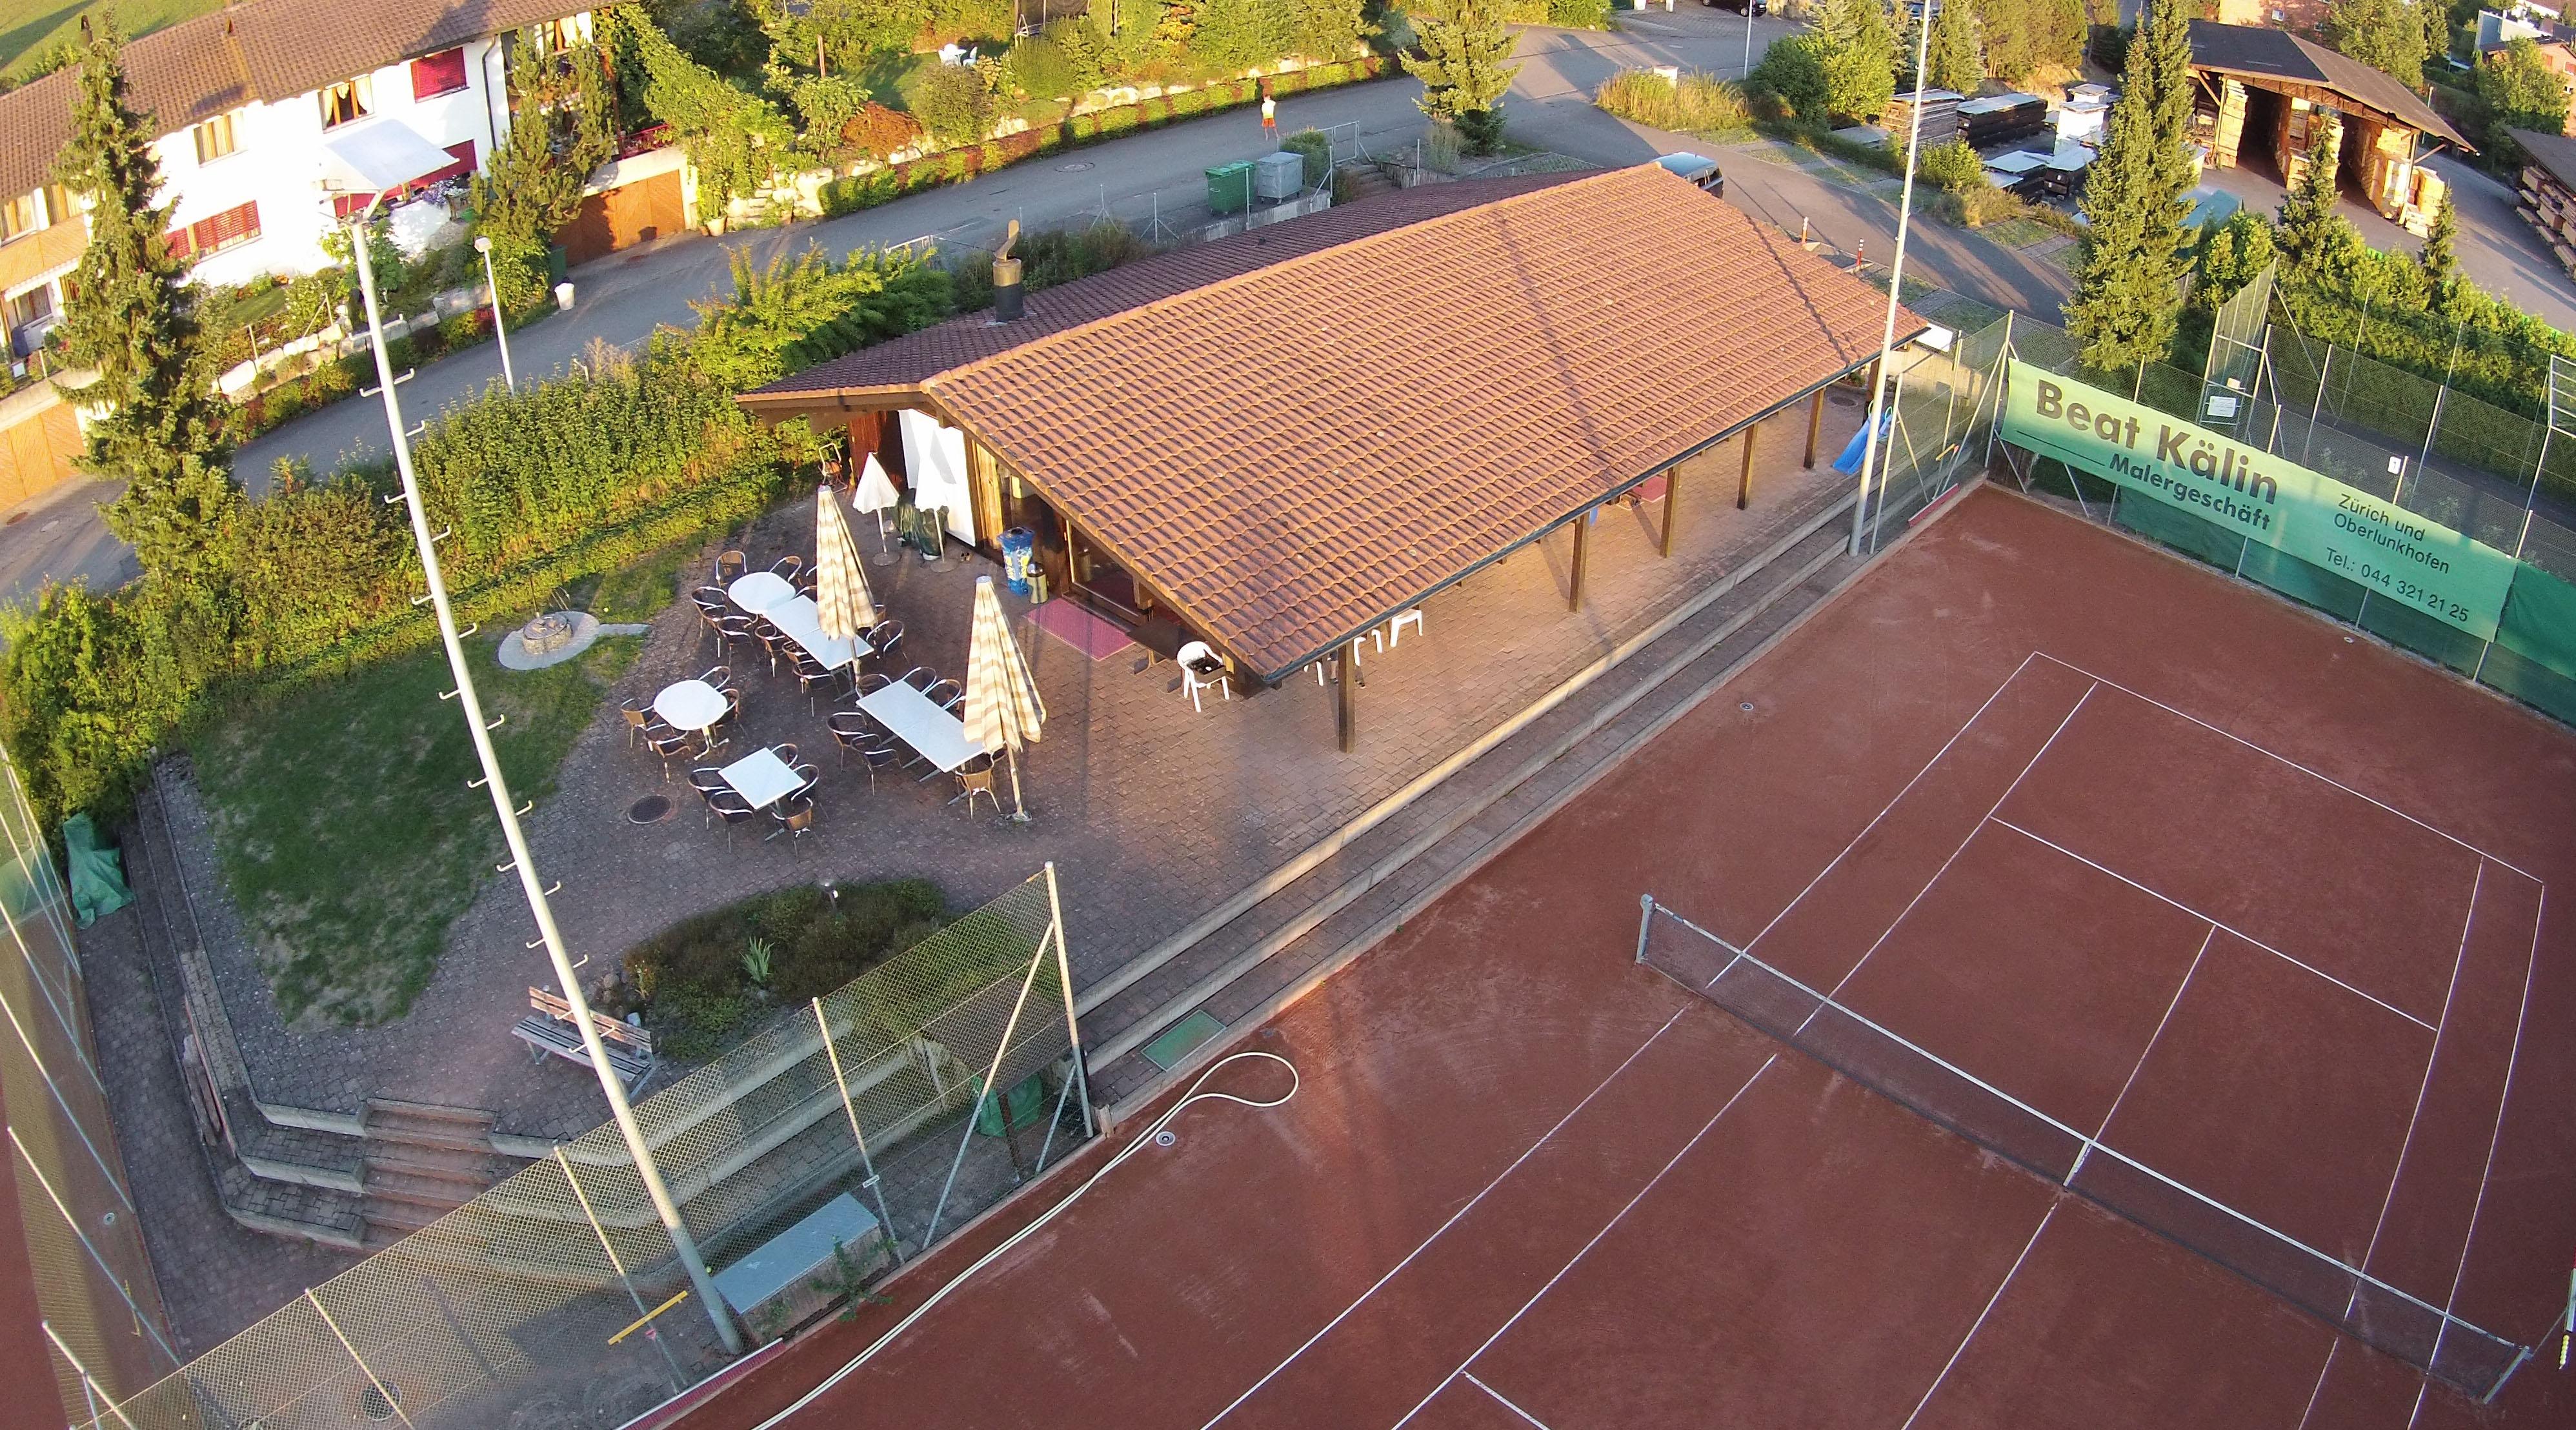 (c) Tennis-oberlunkhofen.ch